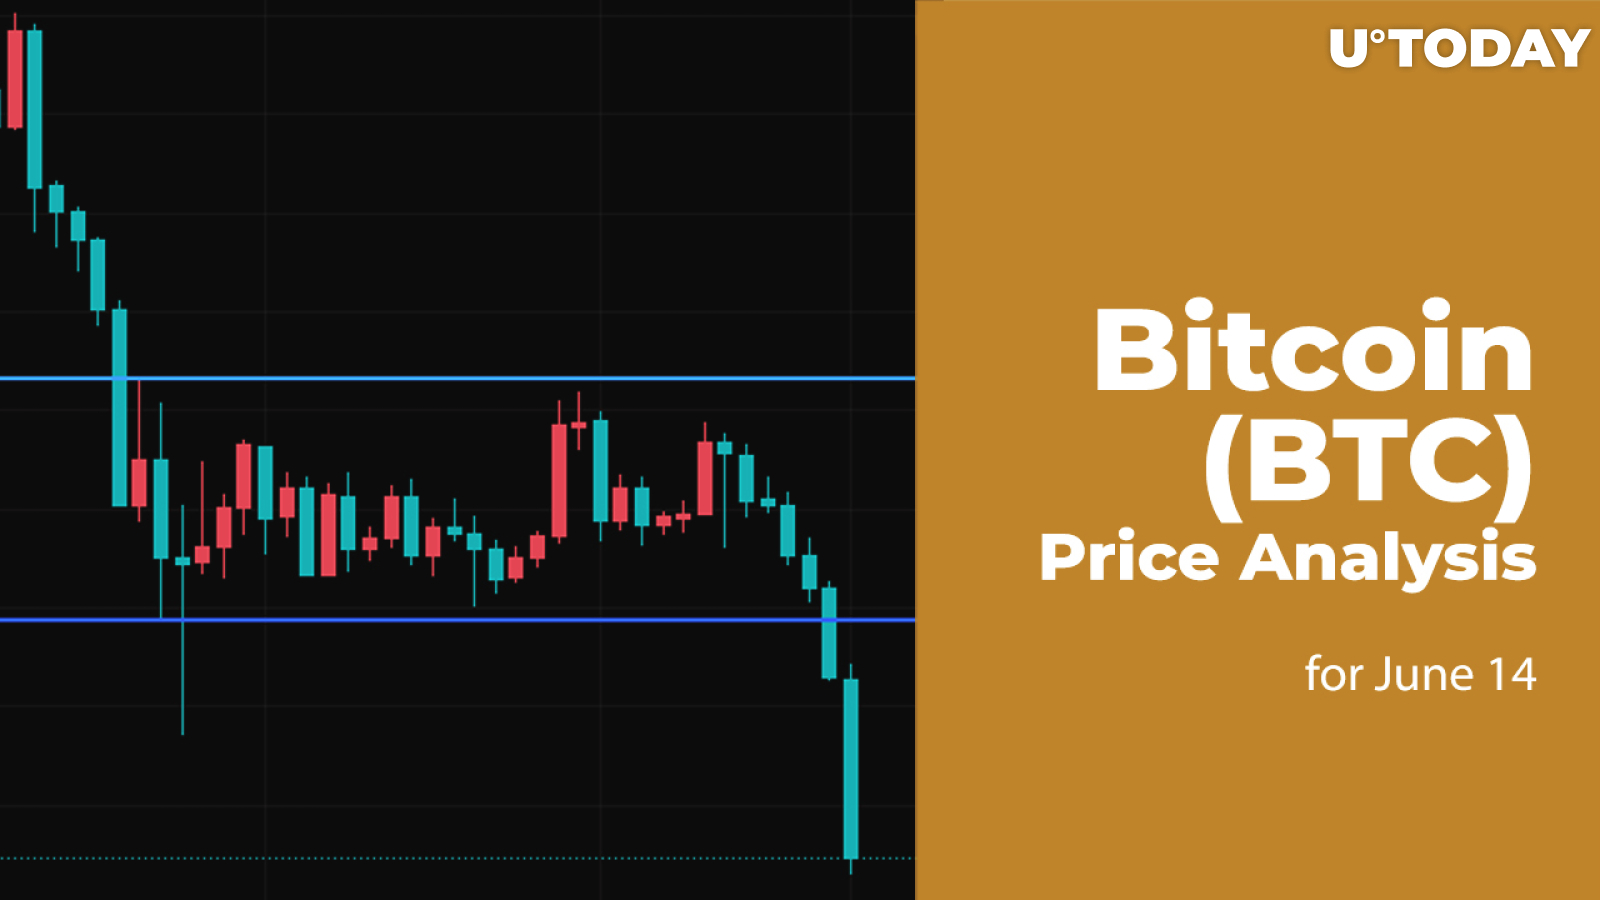 Bitcoin (BTC) Price Analysis for June 14